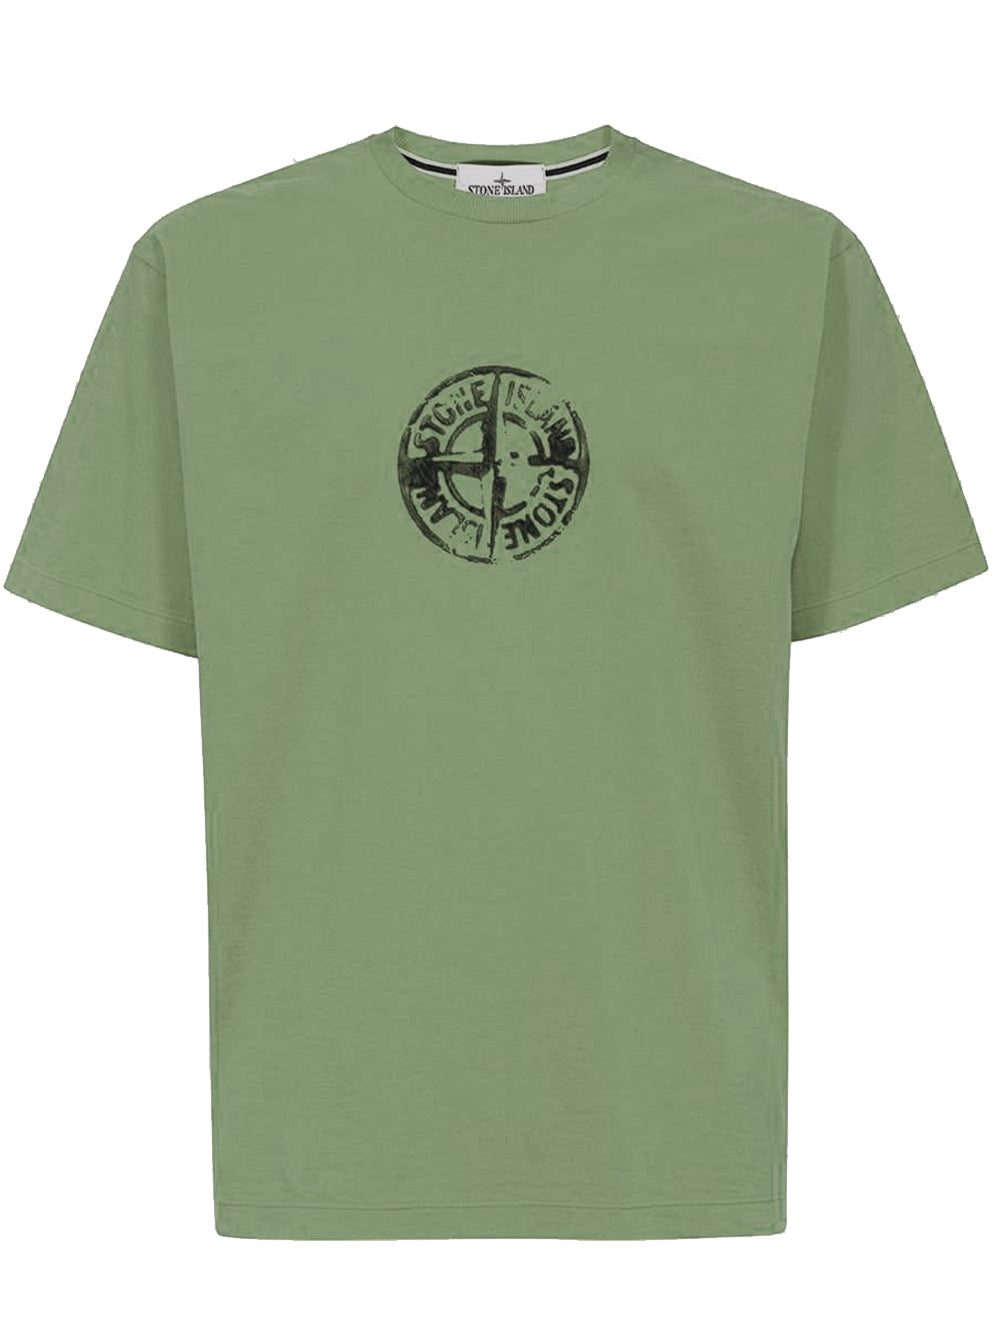 STONE ISLAND - Tee Shirt kaki à logo central